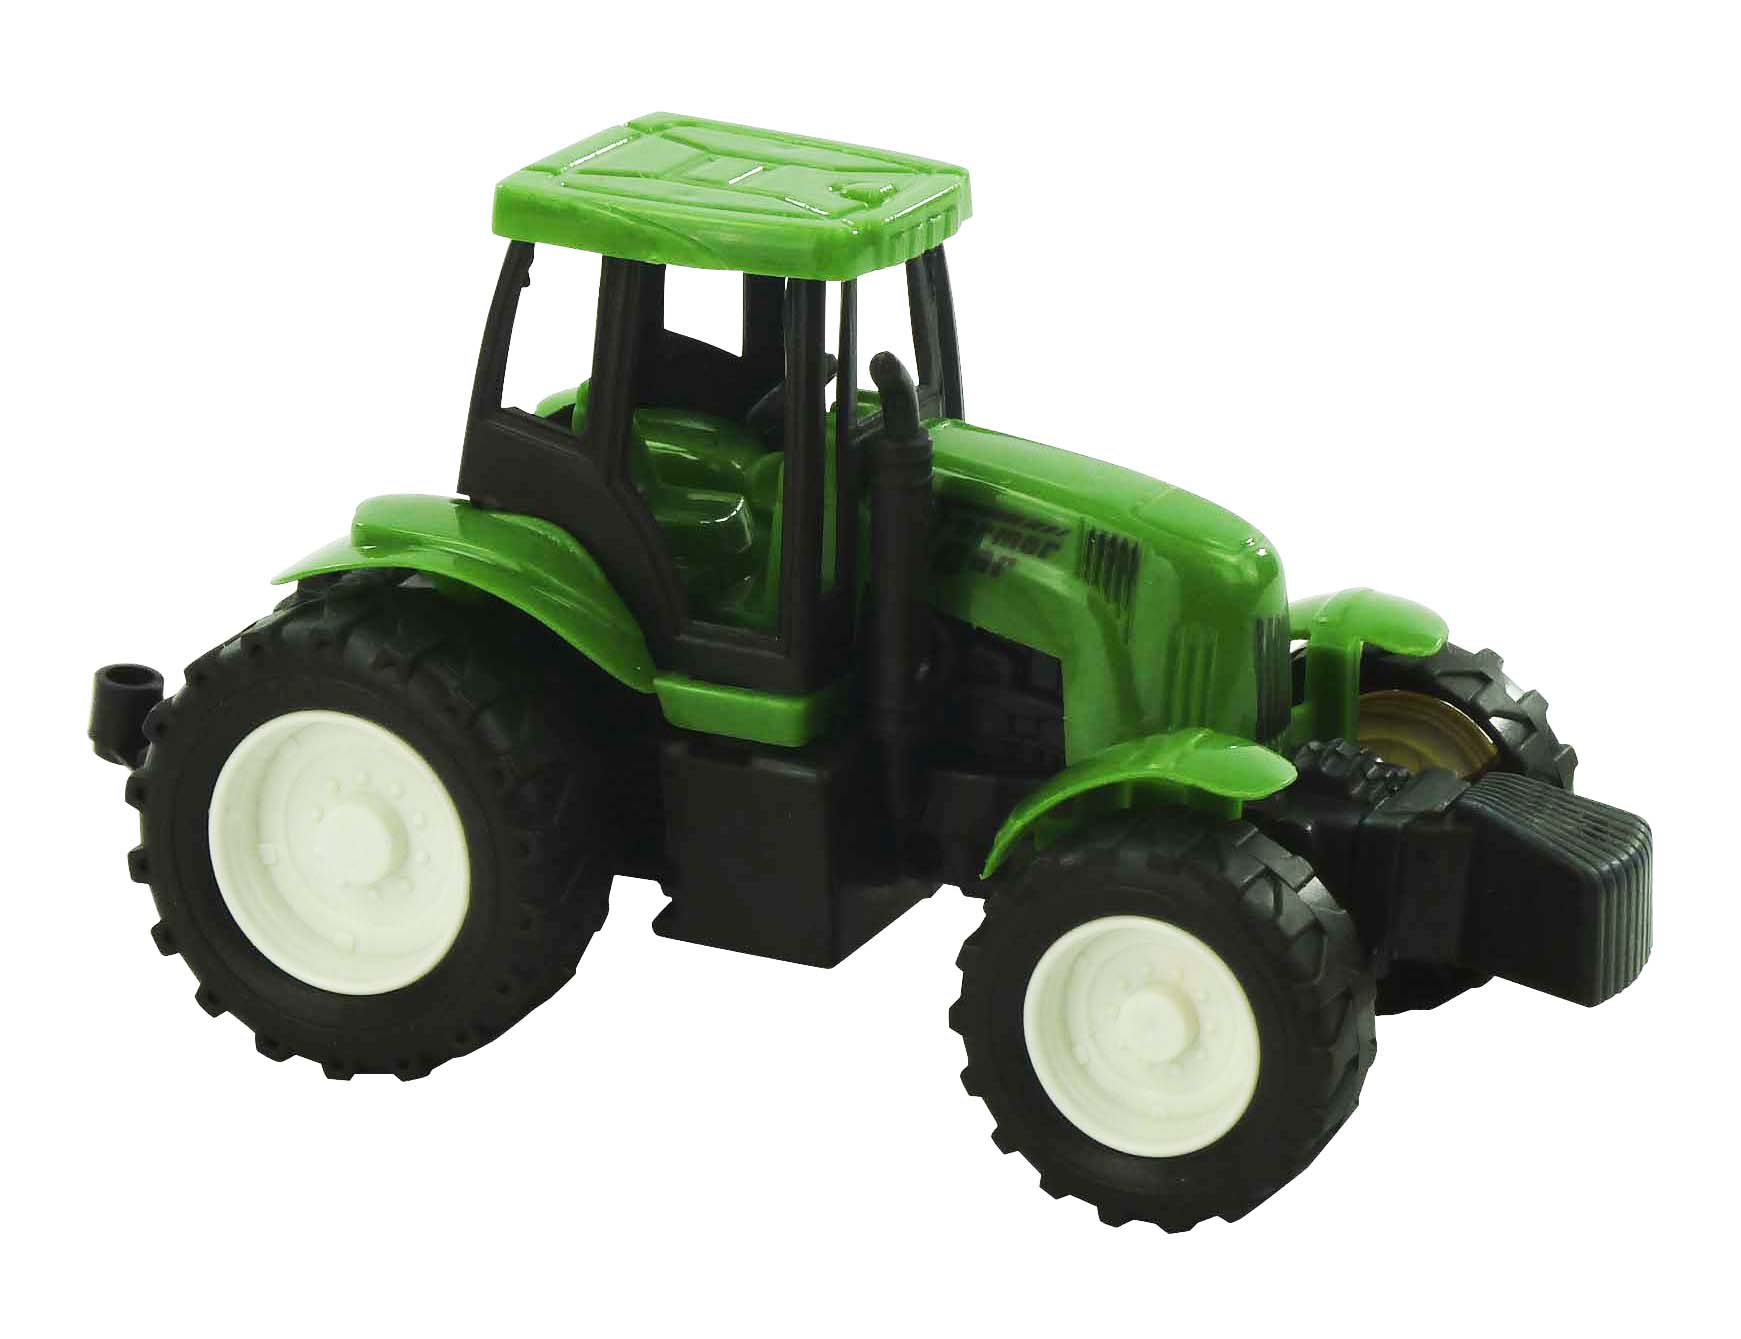 Tractor Pull-back Verkrijgbaar In Rood Of Groen